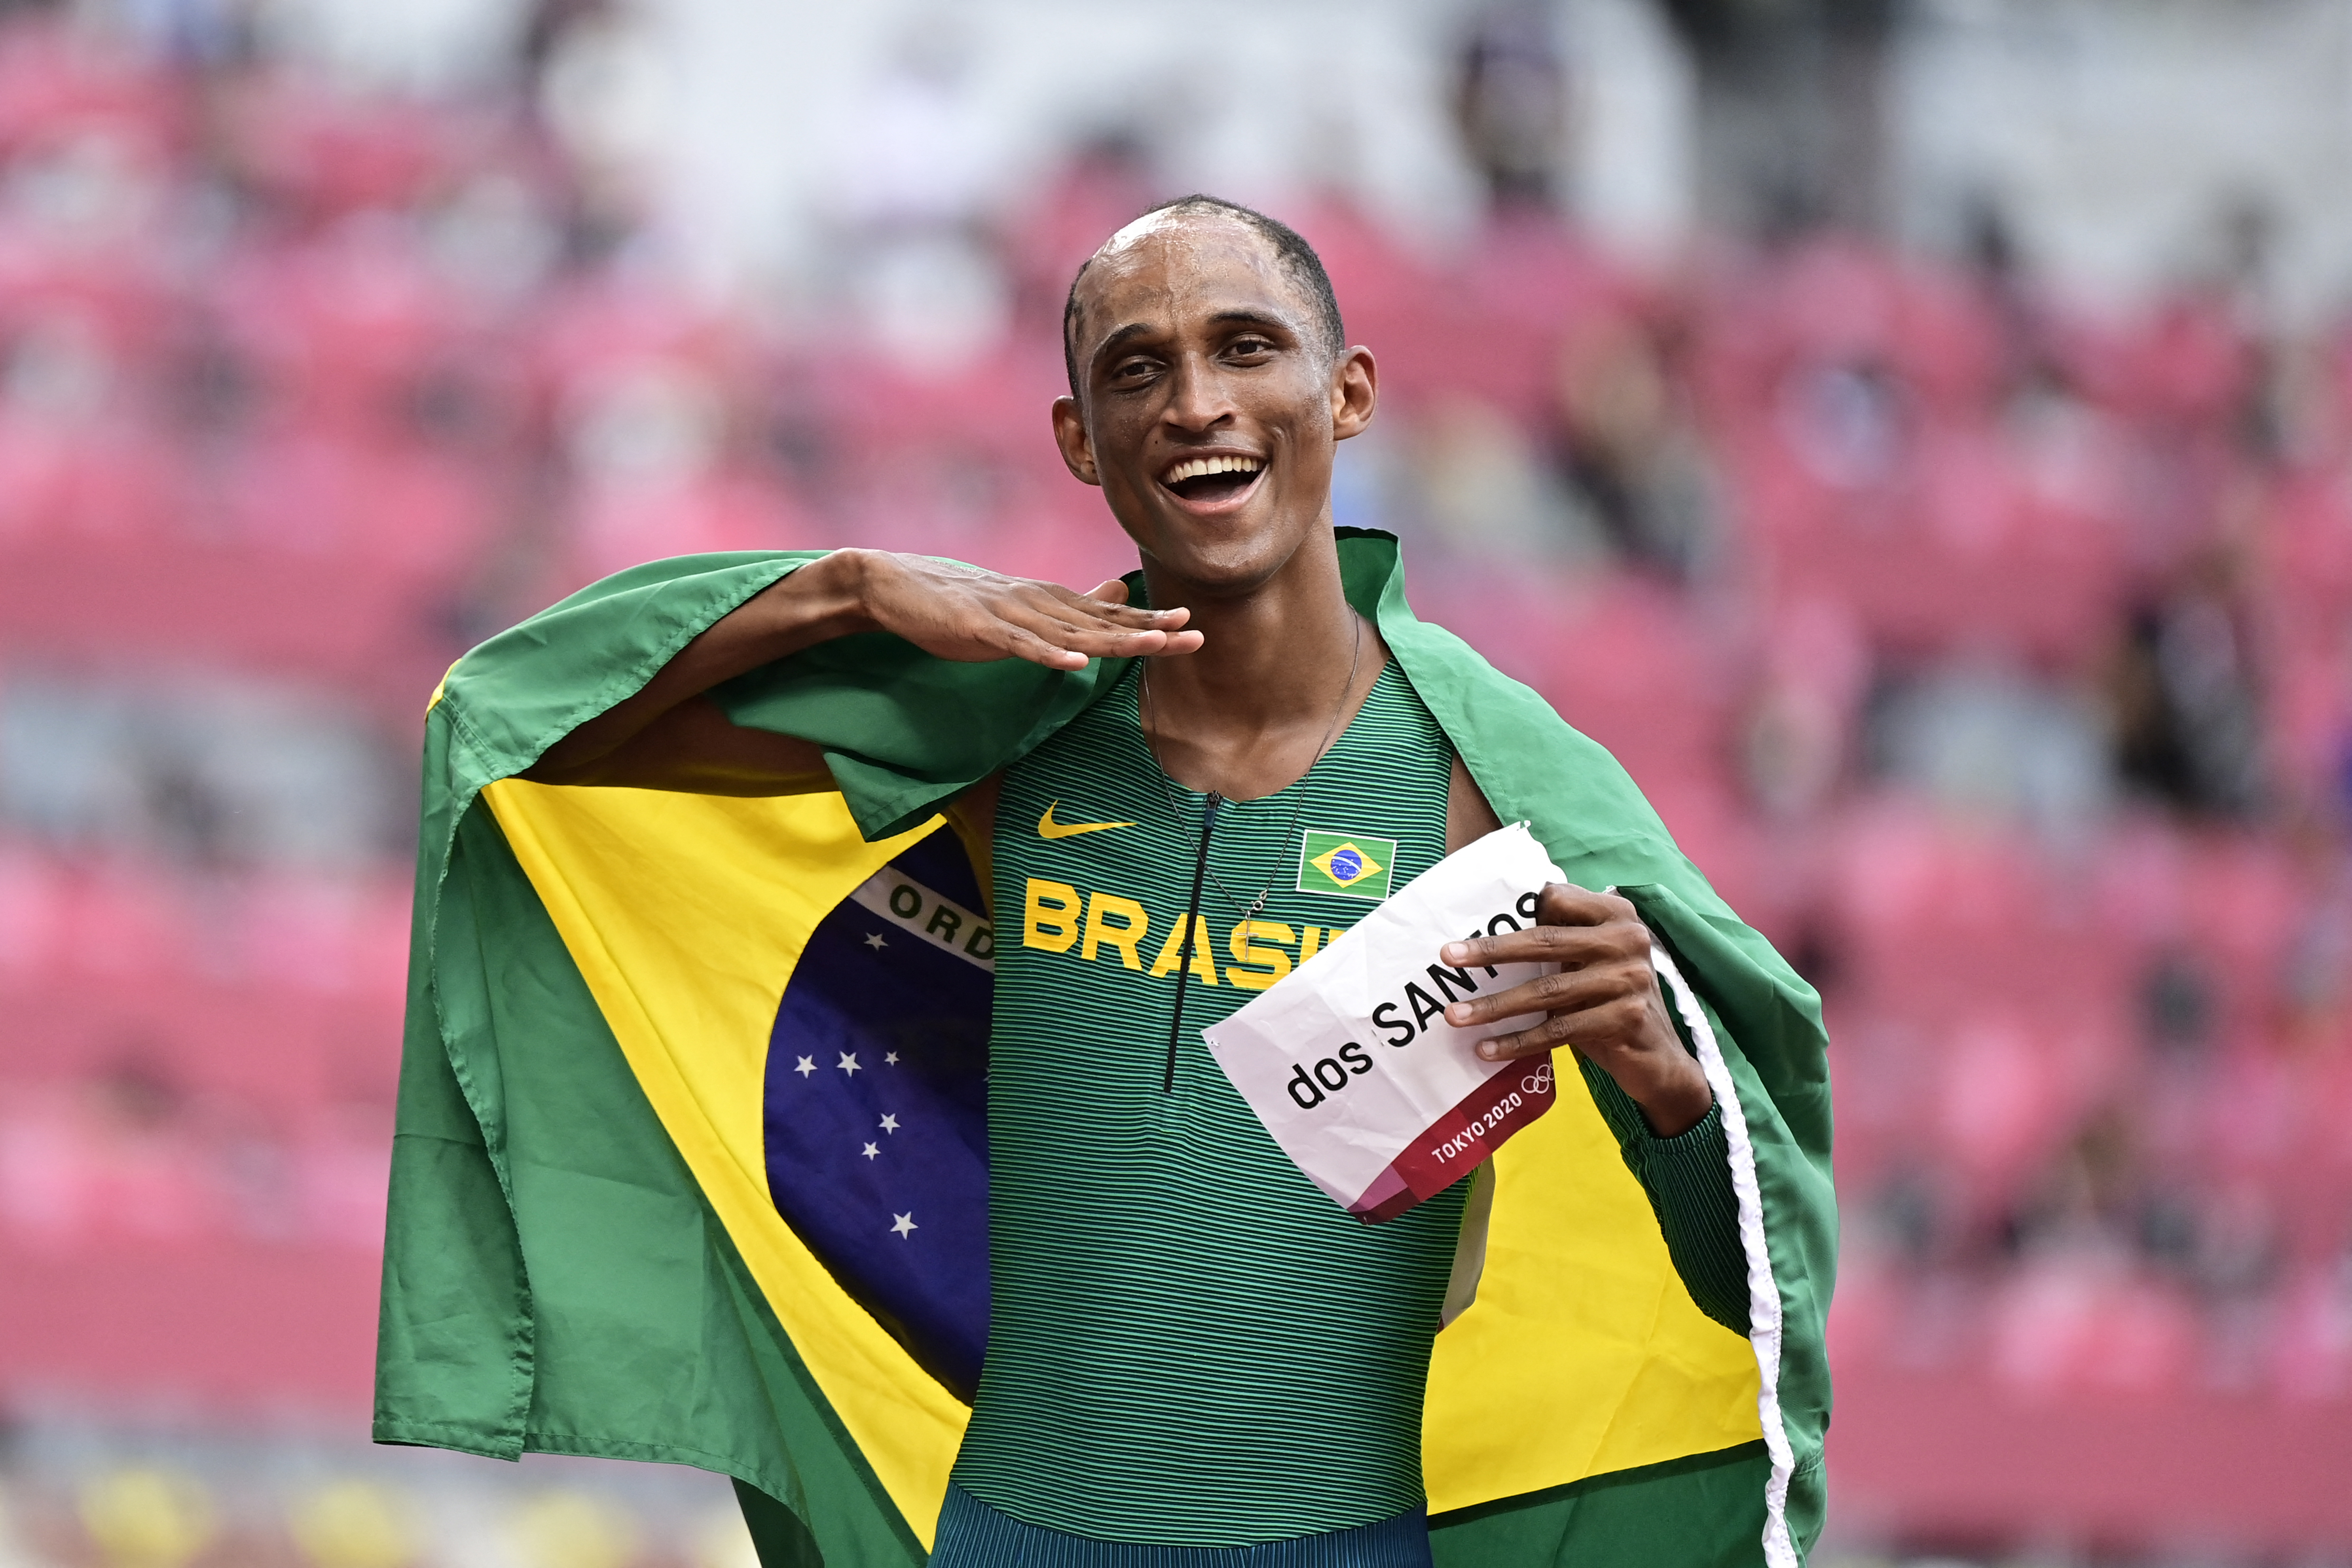 Fotos: Alison dos Santos leva o bronze no atletismo